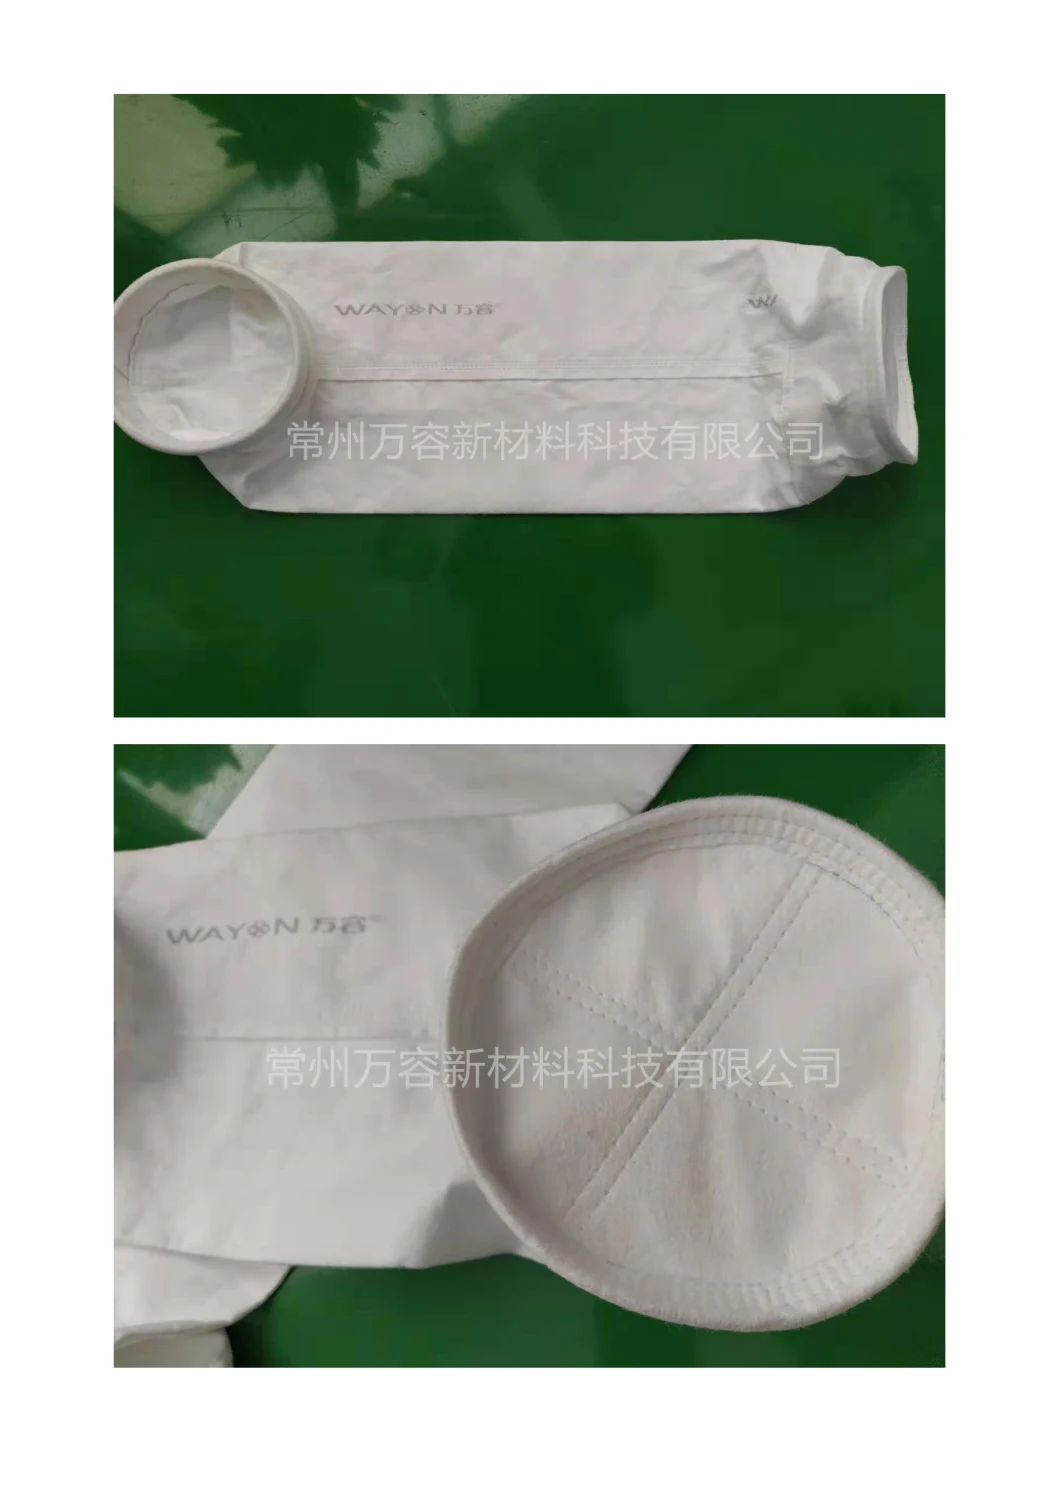 PTFE Filter Bag for High Temperature & Powder Filtration Antistatic Filter Bag